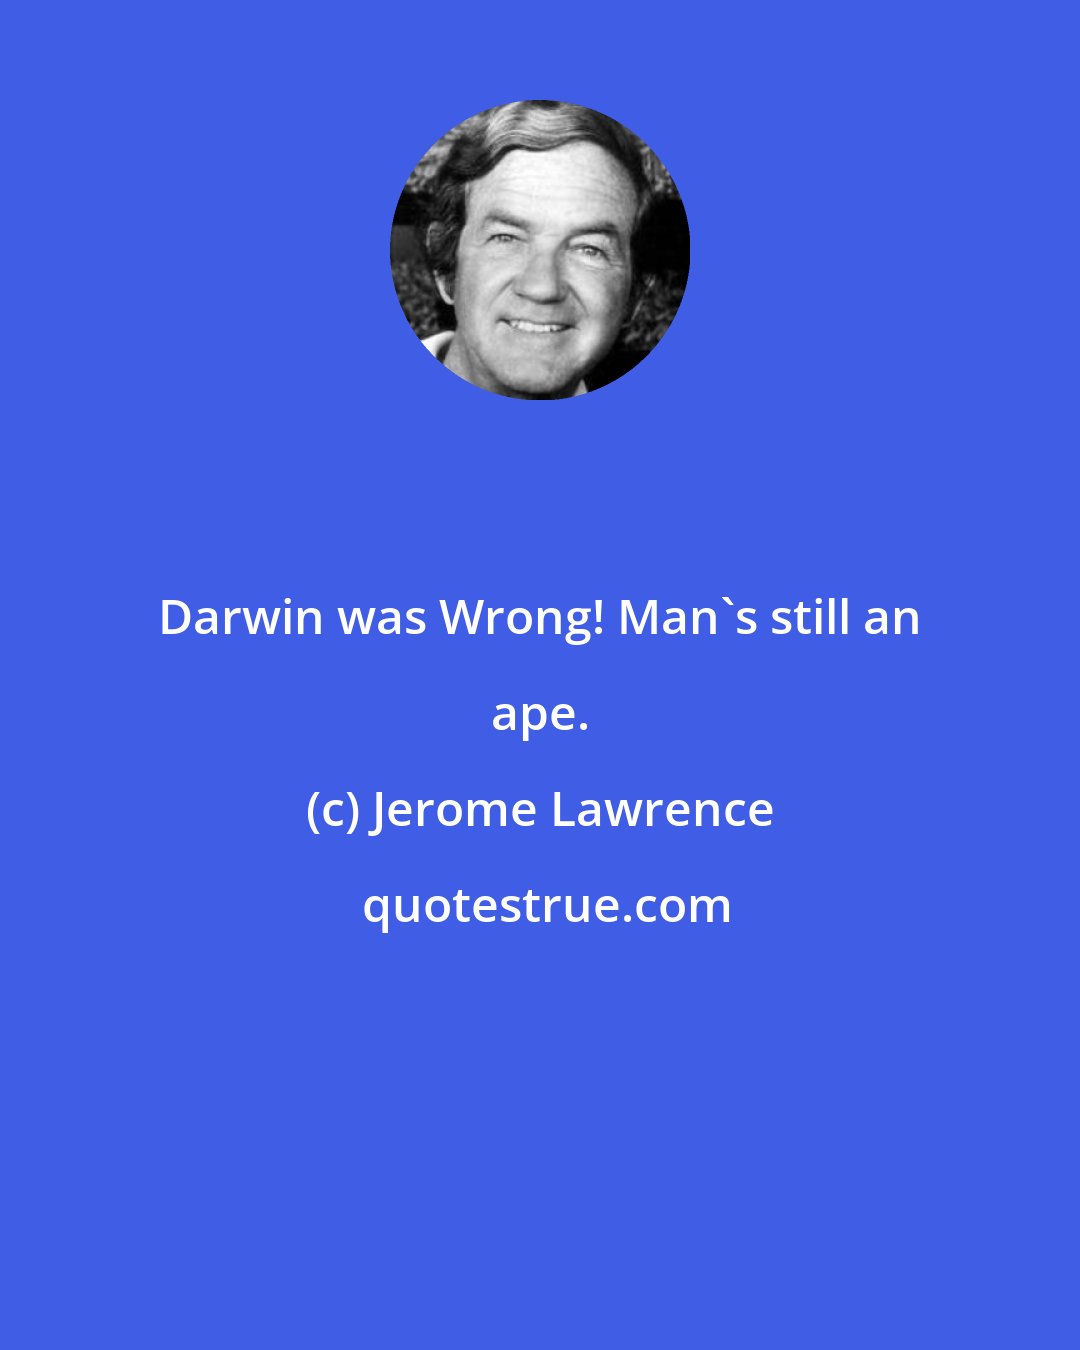 Jerome Lawrence: Darwin was Wrong! Man's still an ape.